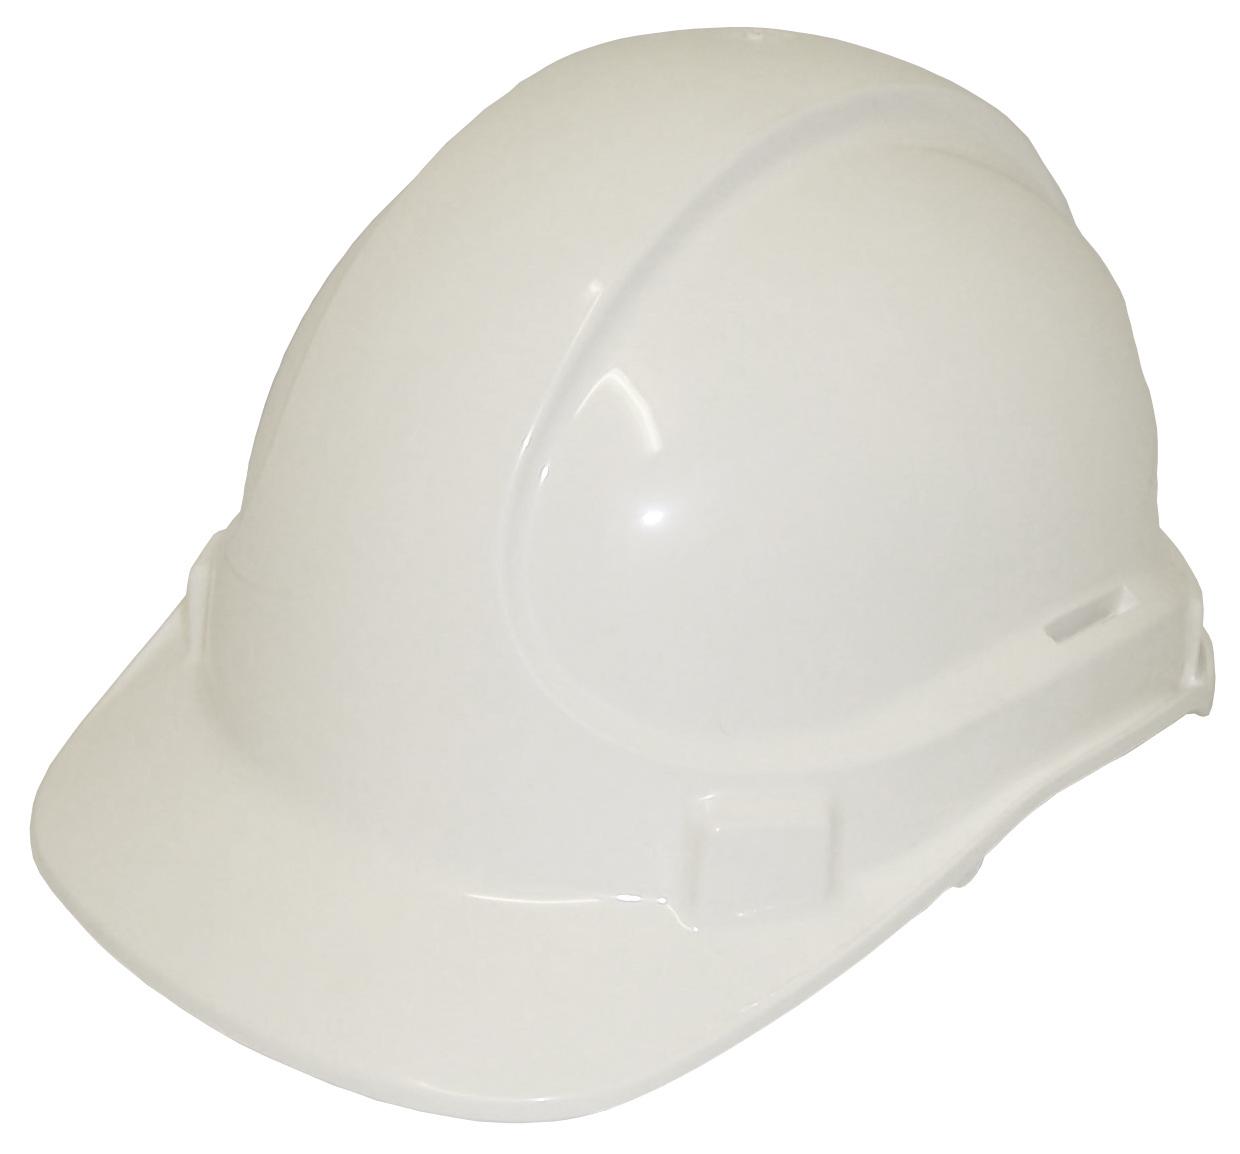 3M TA560 - Safety Helmet White - Click for more info